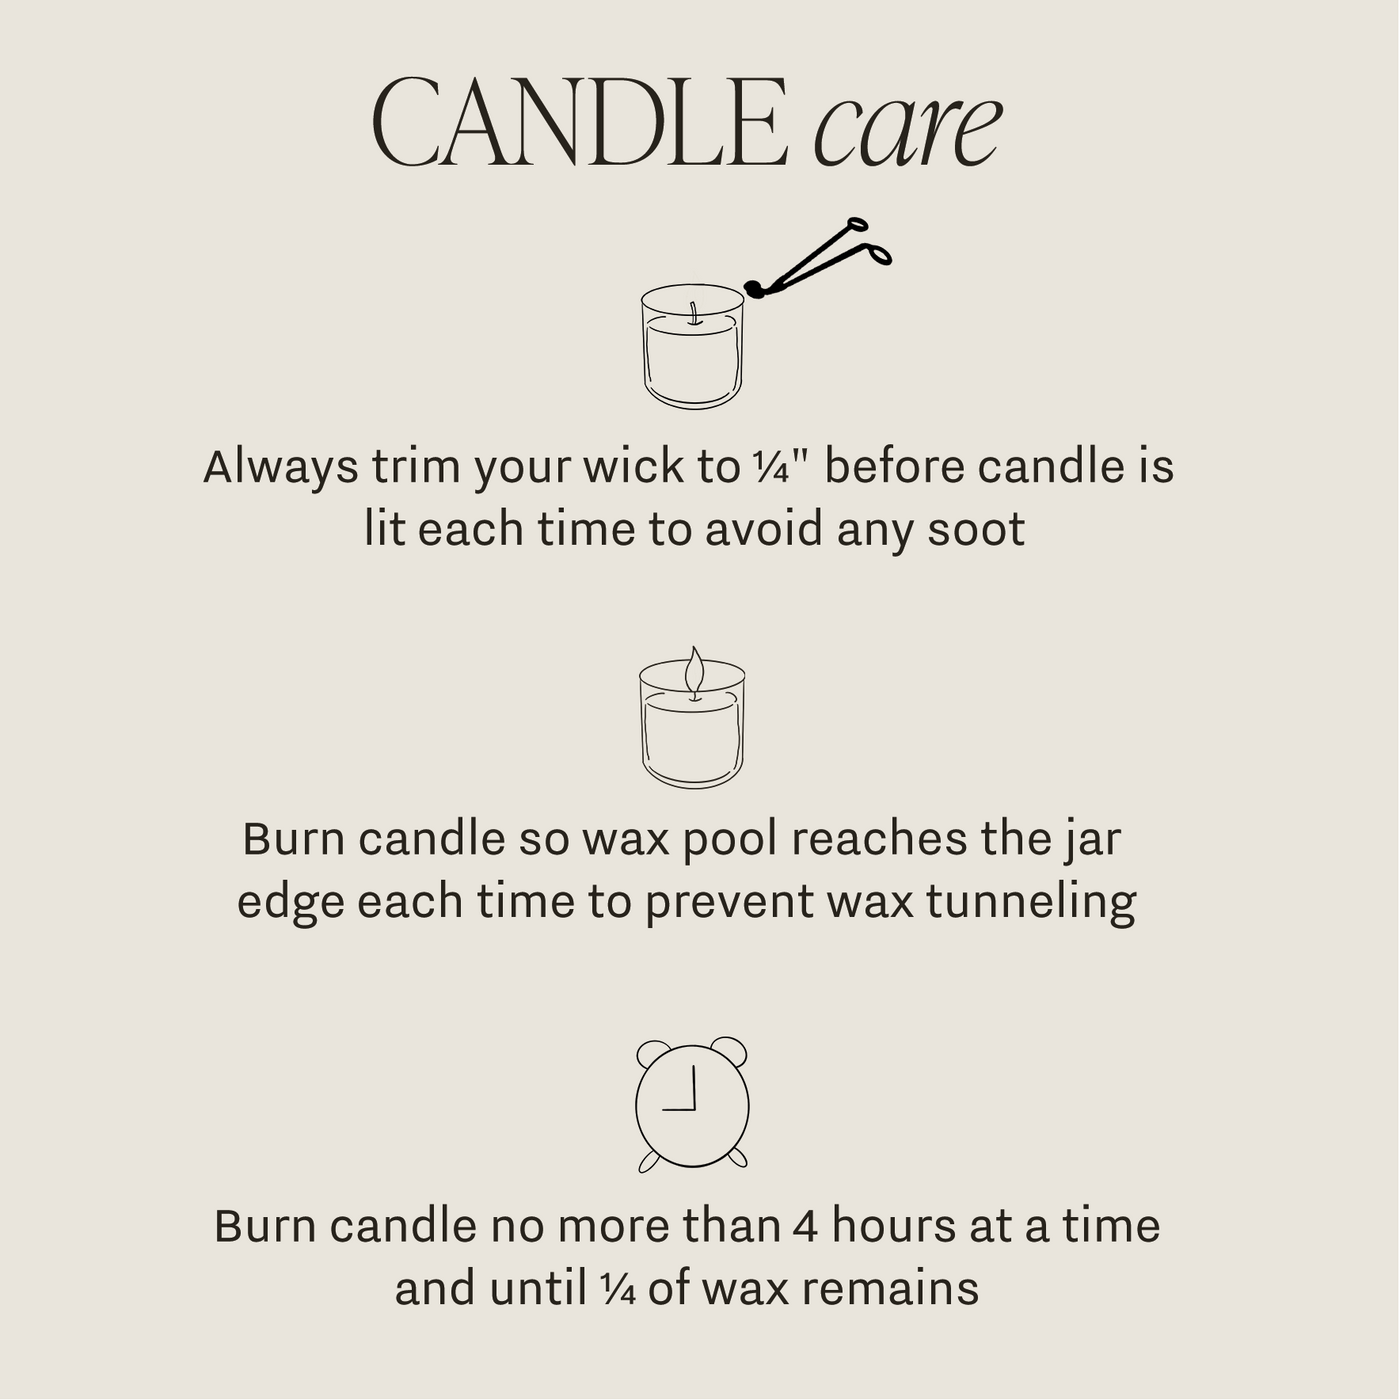 Relaxation Soy Candle - Black Stoneware Jar - 12 oz